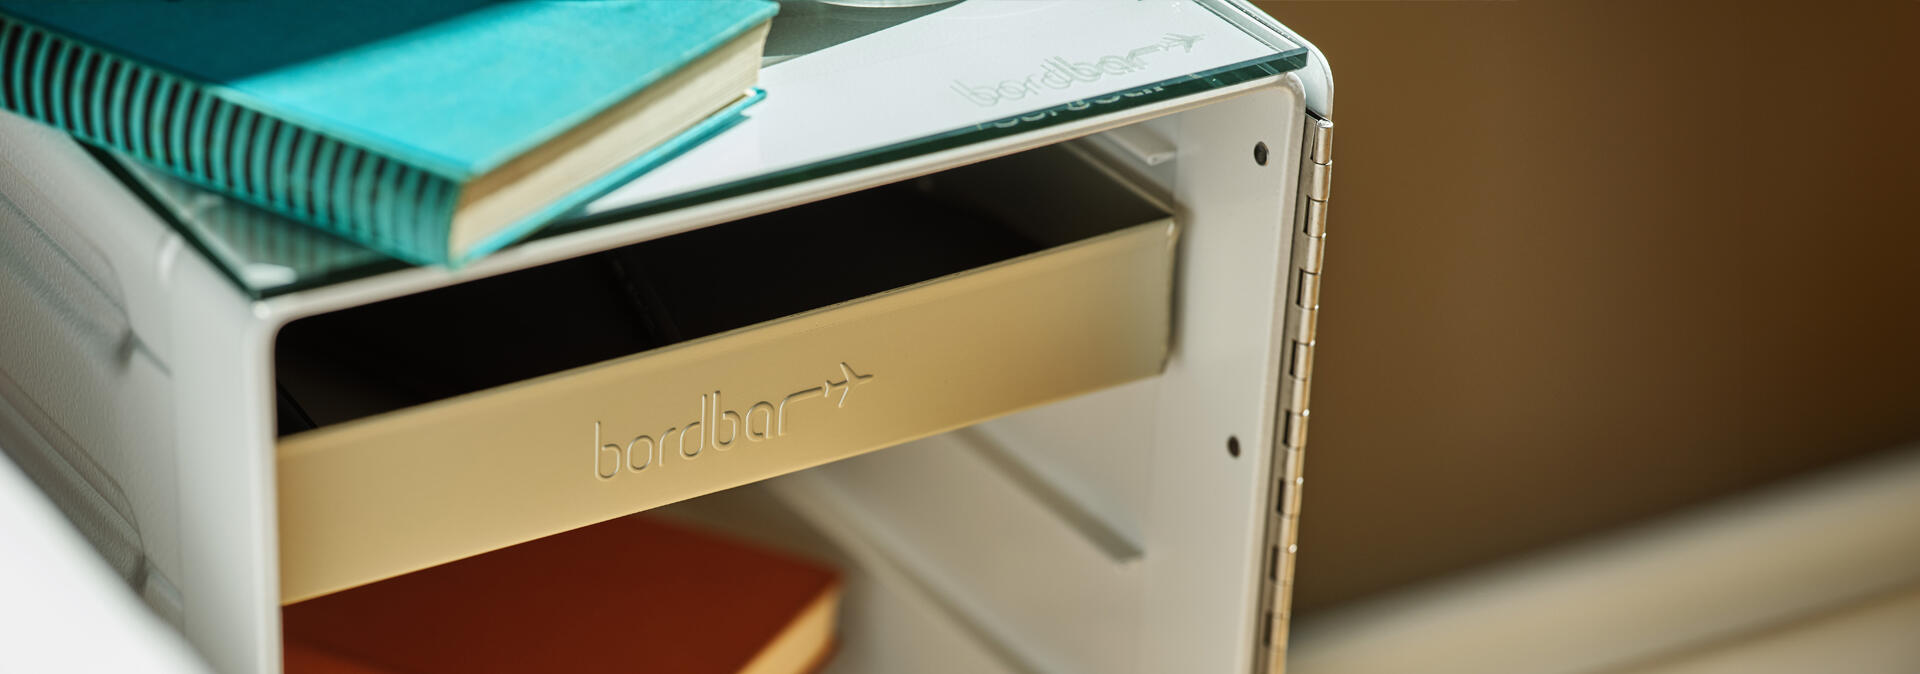 bordbar_start_slider_bedside-table_desktop